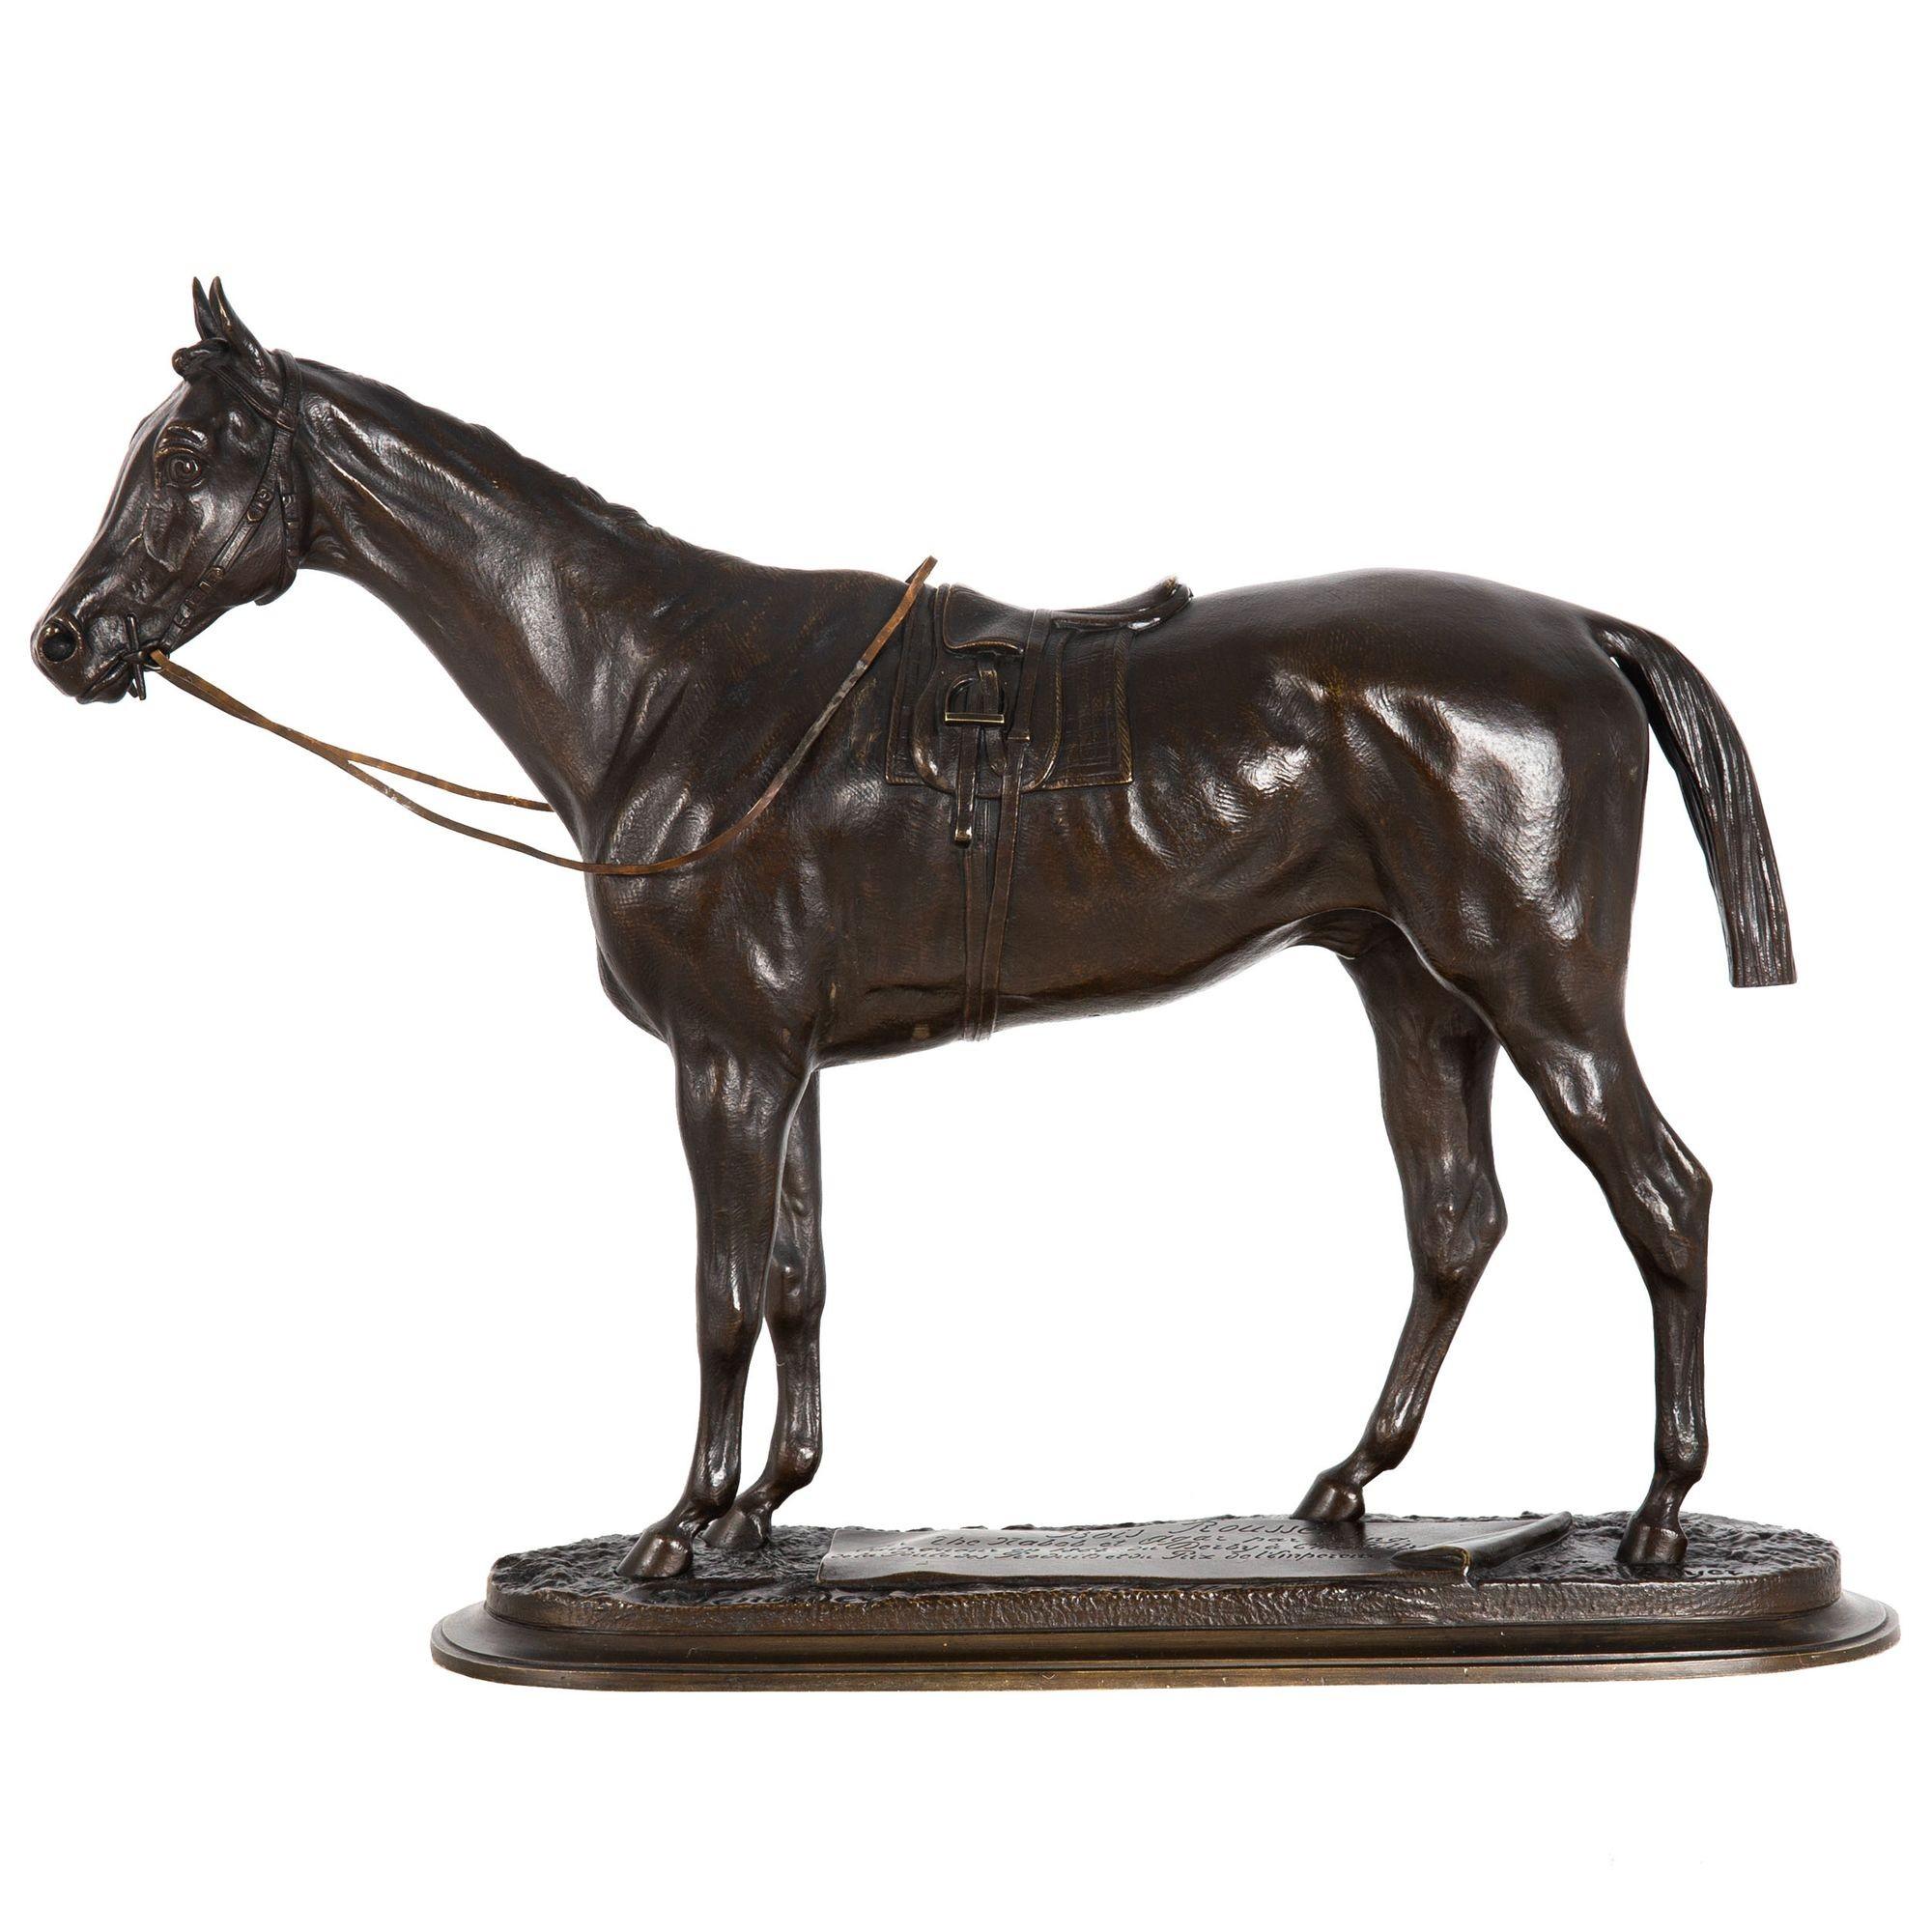 PIERRE LENORDEZ
French, 1815-1892

Portrait of Stallion Racehorse 